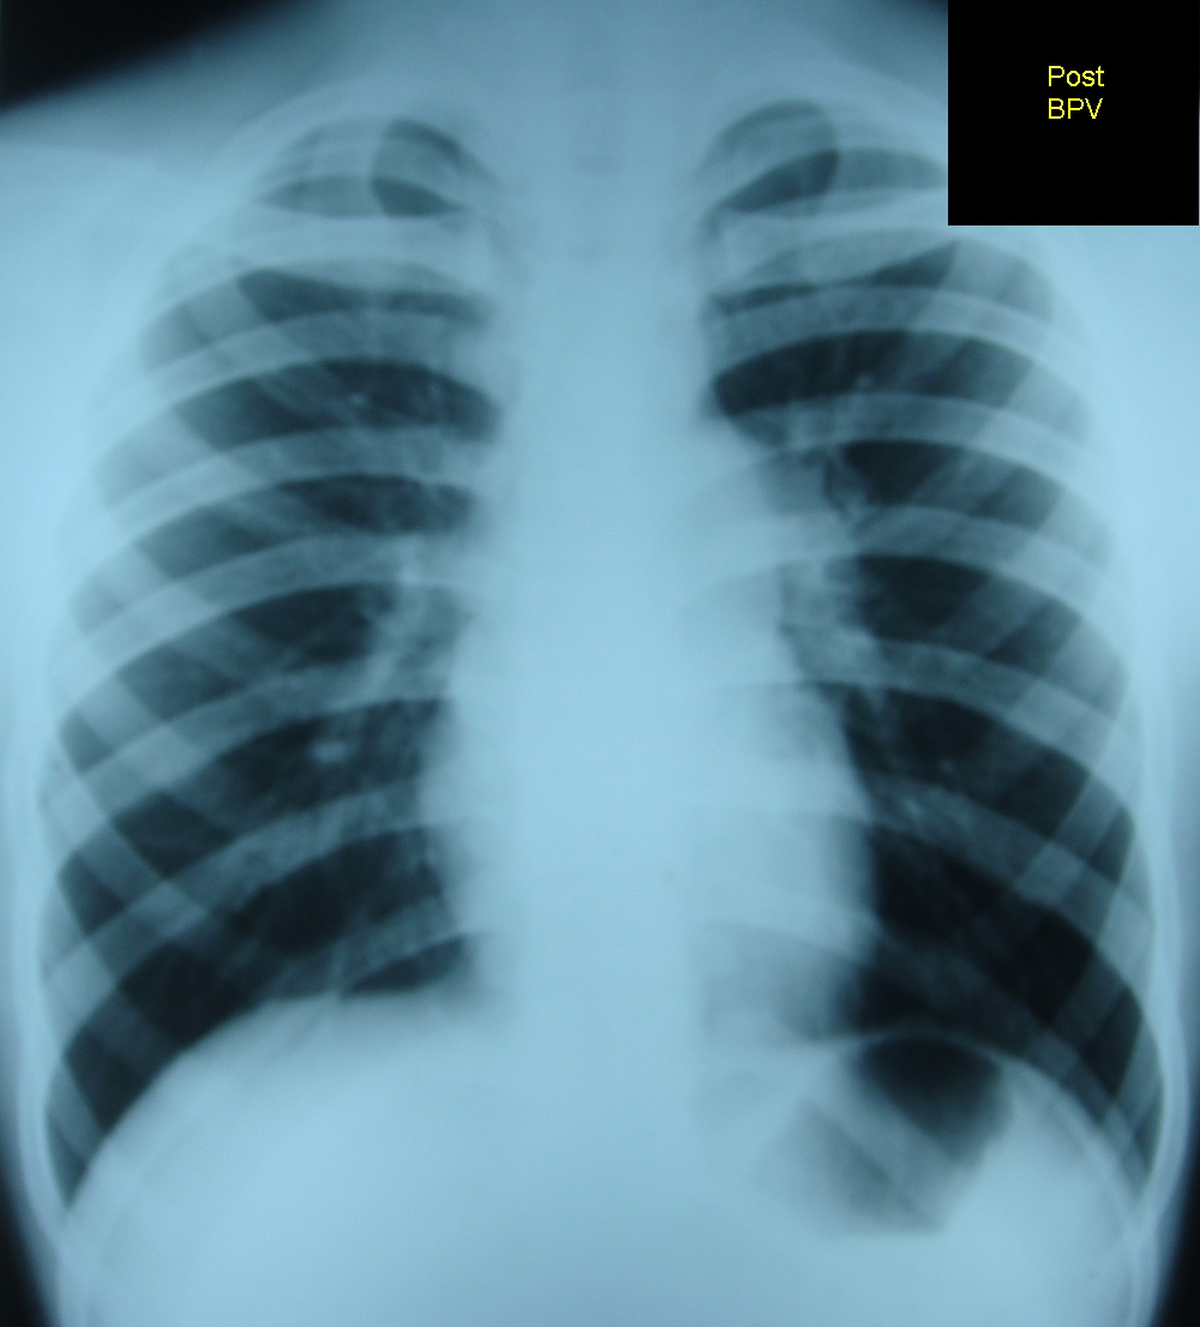 Post balloon pulmonary valvotomy (BPV) X-ray chest PA view